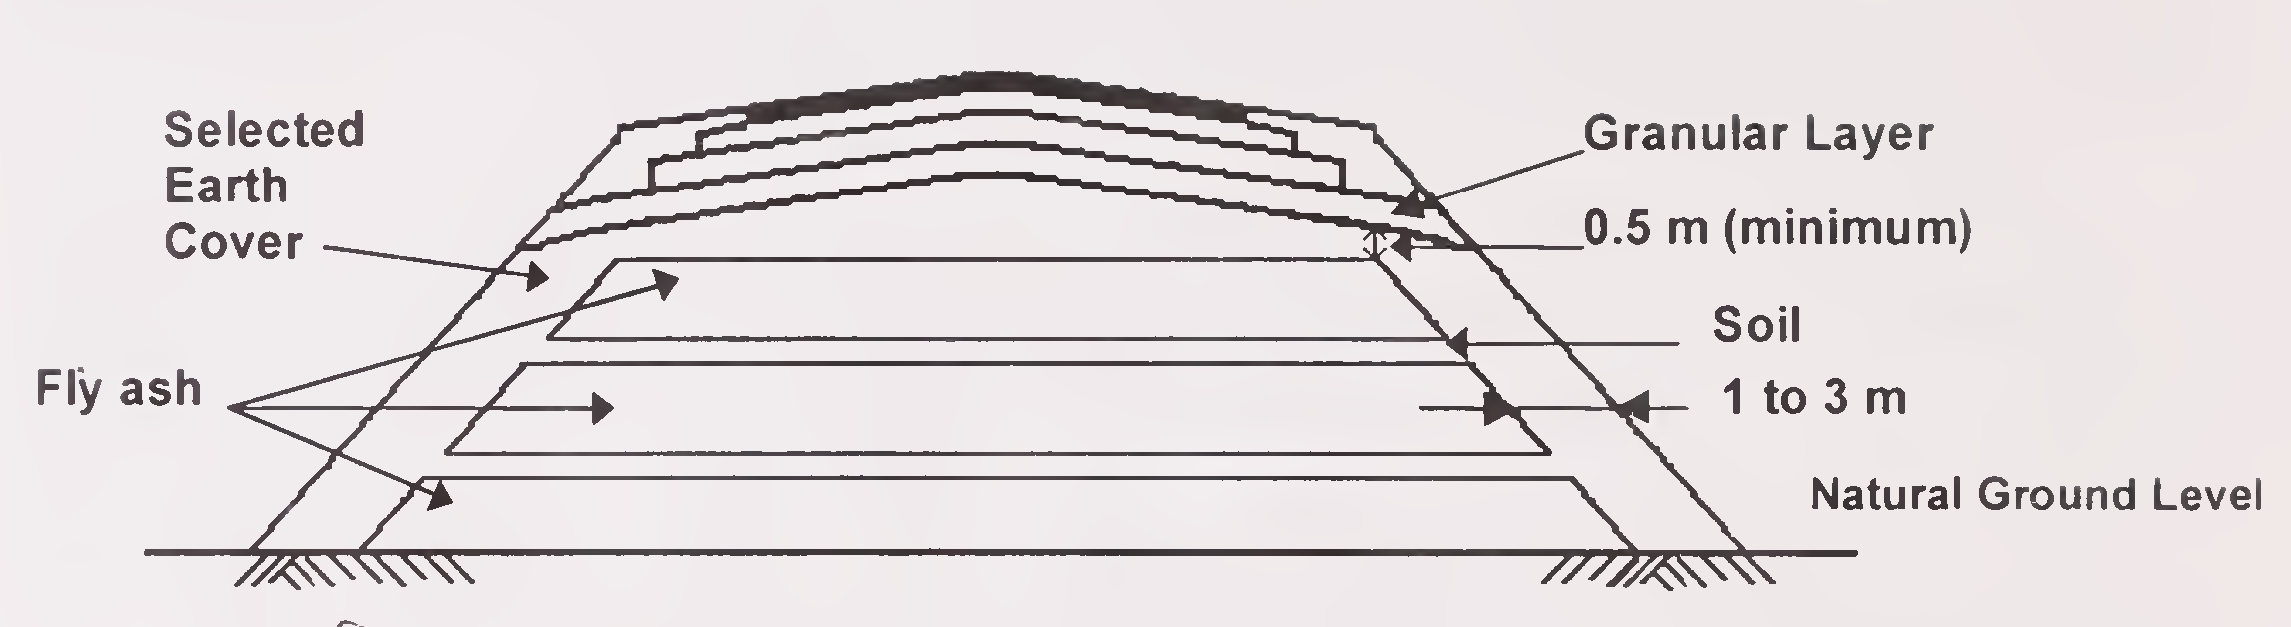 I. ఫ్లై యాష్ మరియు నేల యొక్క ప్రత్యామ్నాయ పొరతో కట్ట యొక్క సాధారణ క్రాస్-సెక్షన్